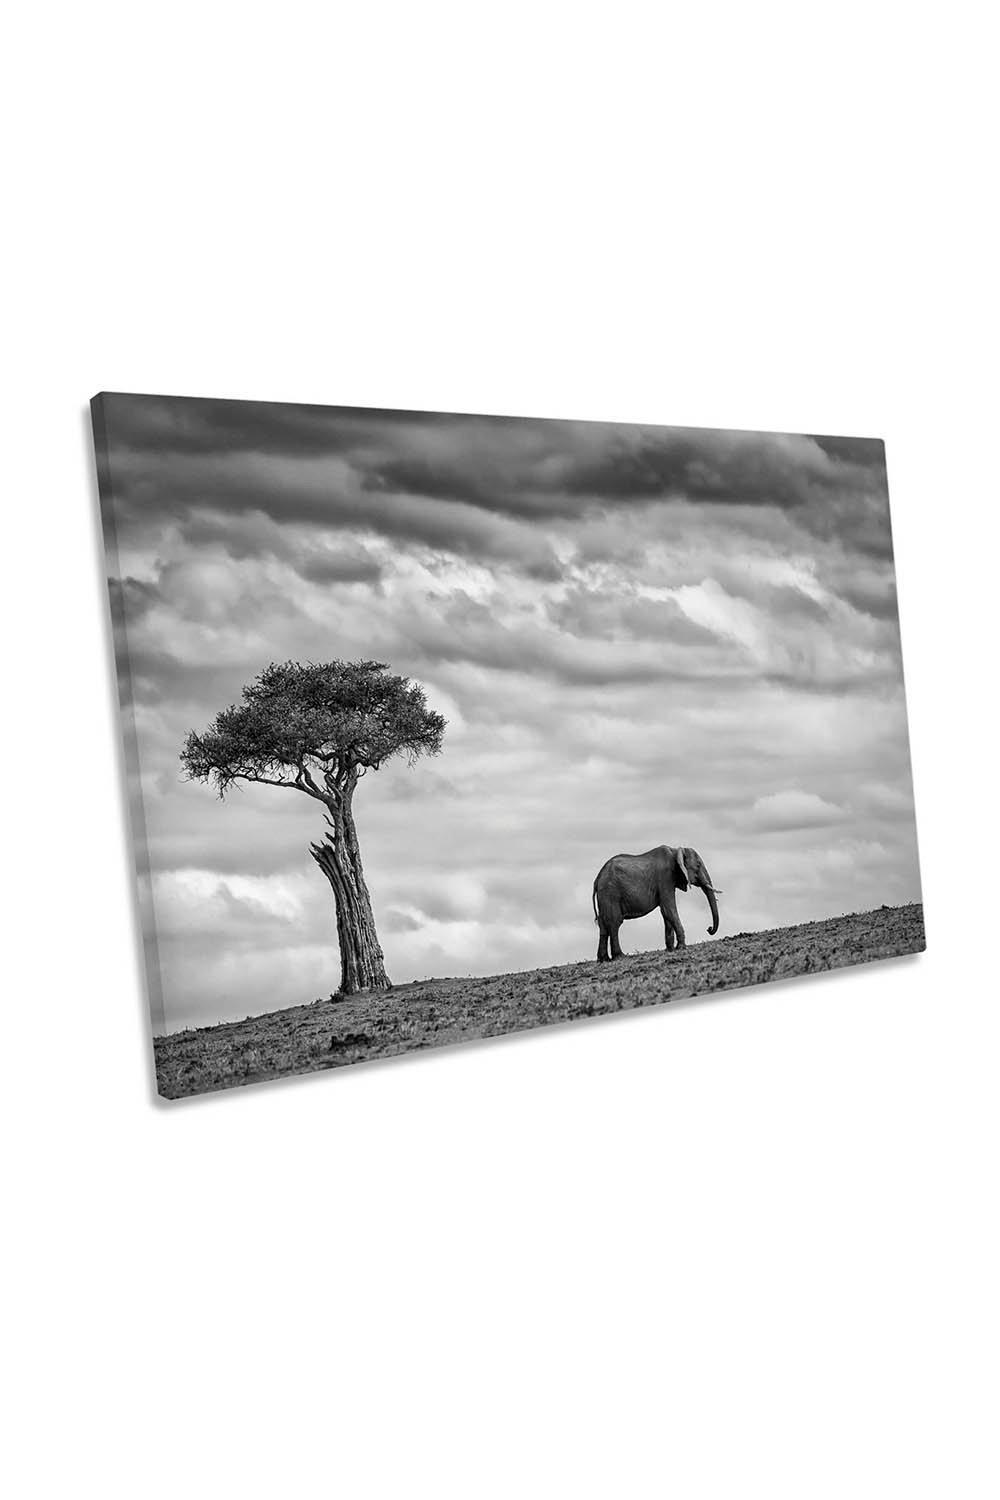 Elephant Landscape Animal Wildlife Canvas Wall Art Picture Print